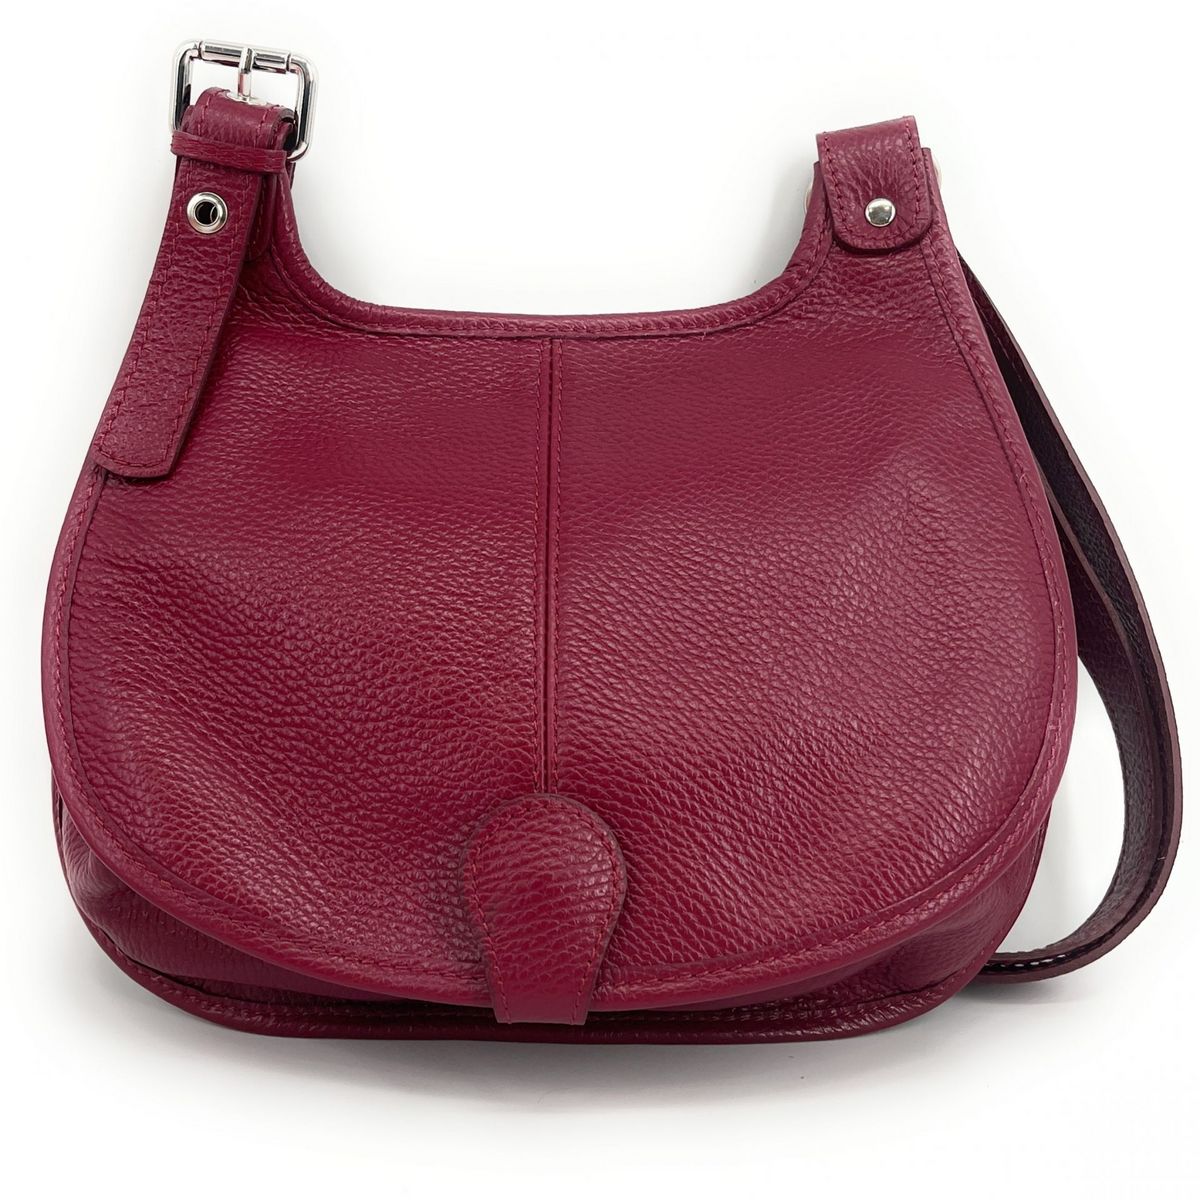 Pochette cuir femme - Oh My Bag